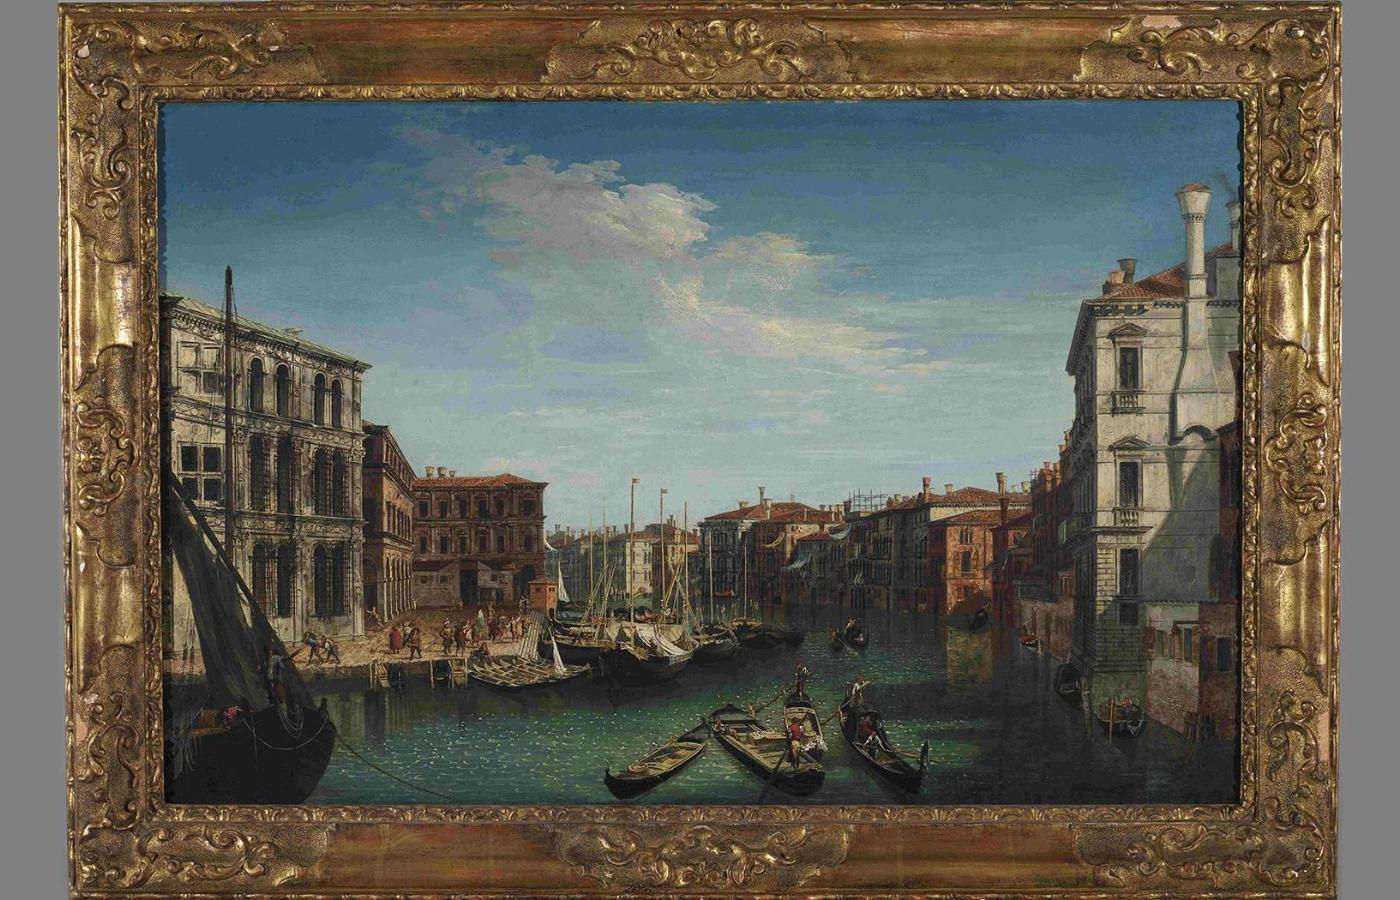 CANAL GRANDE Z PALAZZO CAMERLENGHI, Michele Marieschi (1710-1743), 1731-1743, olej, płótno